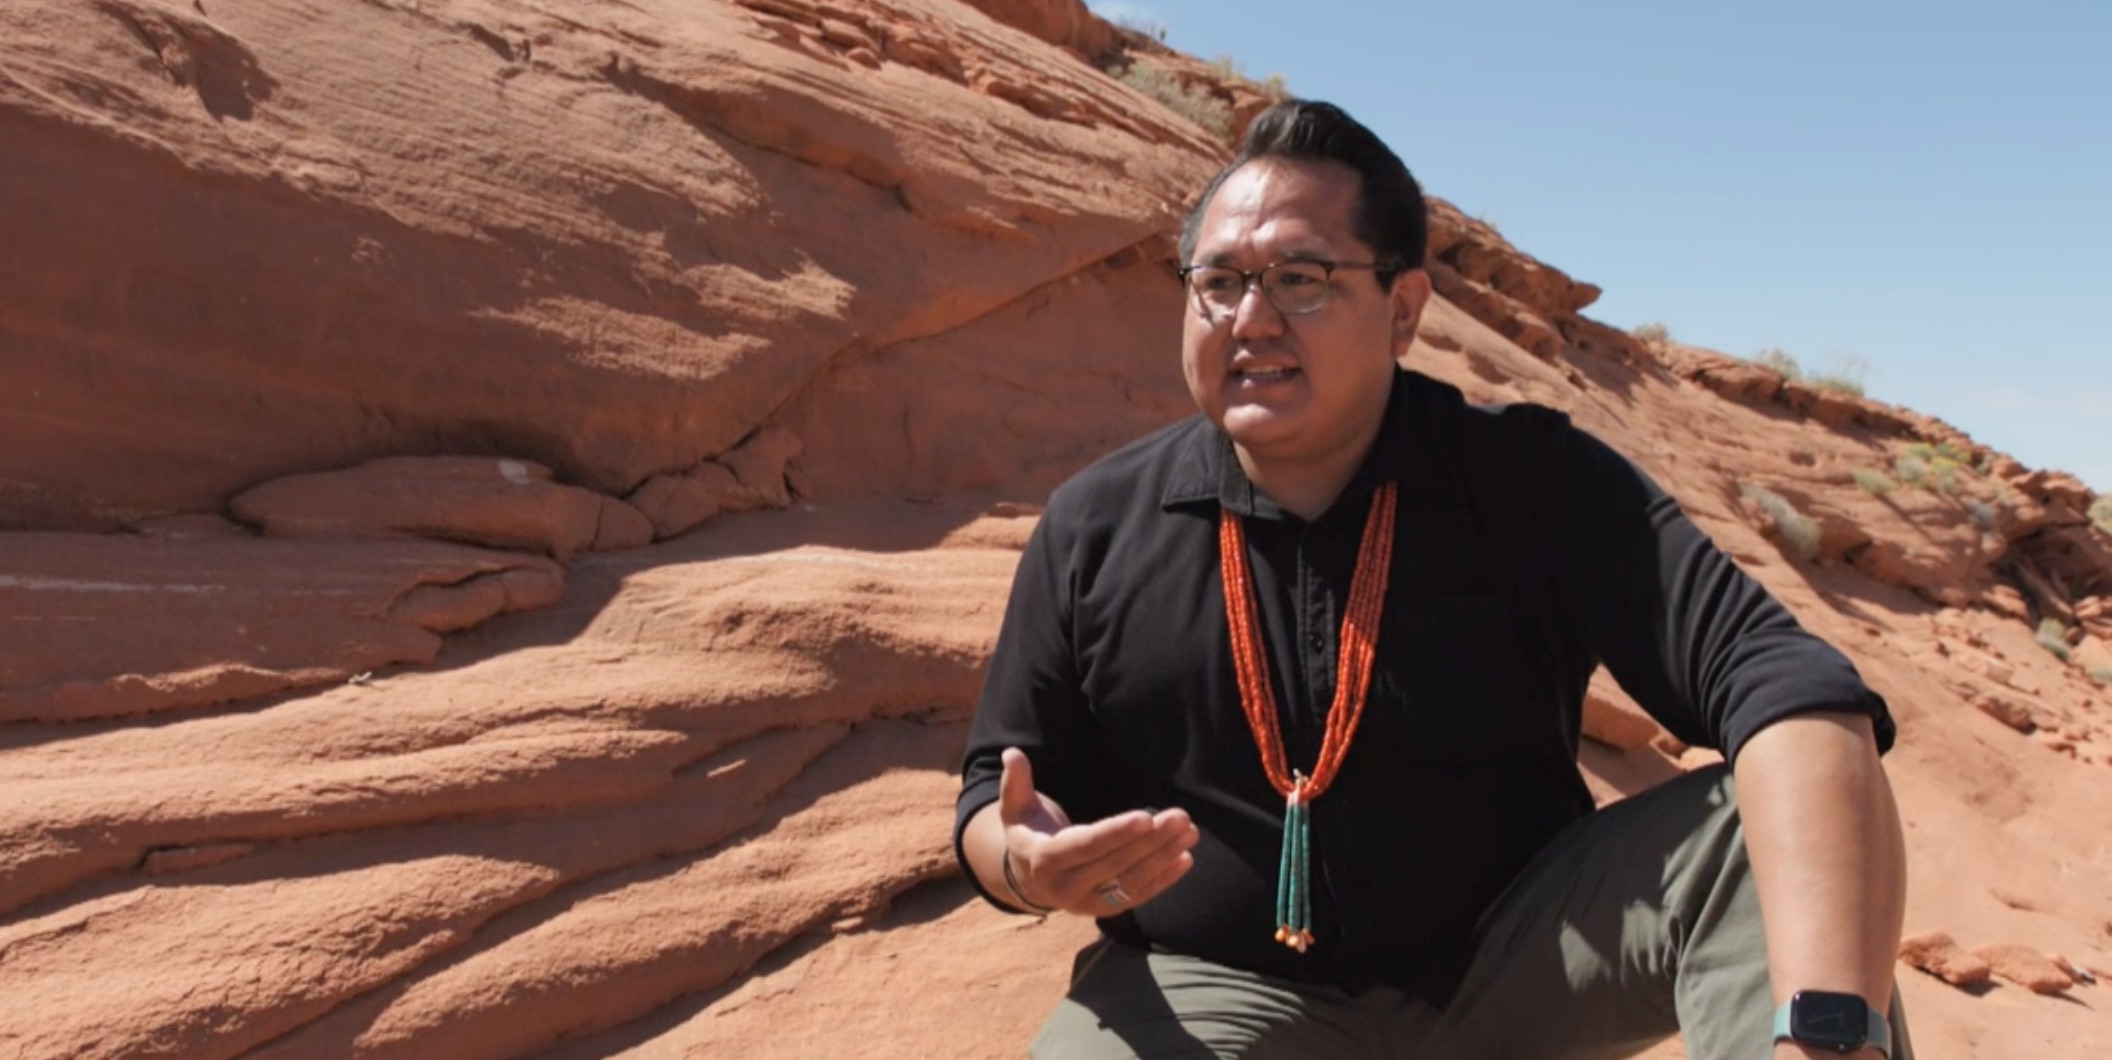 NASA’s Aaron Yazzie explores Mars in PBS’s ‘Native America’ Season 2 (exclusive) Space